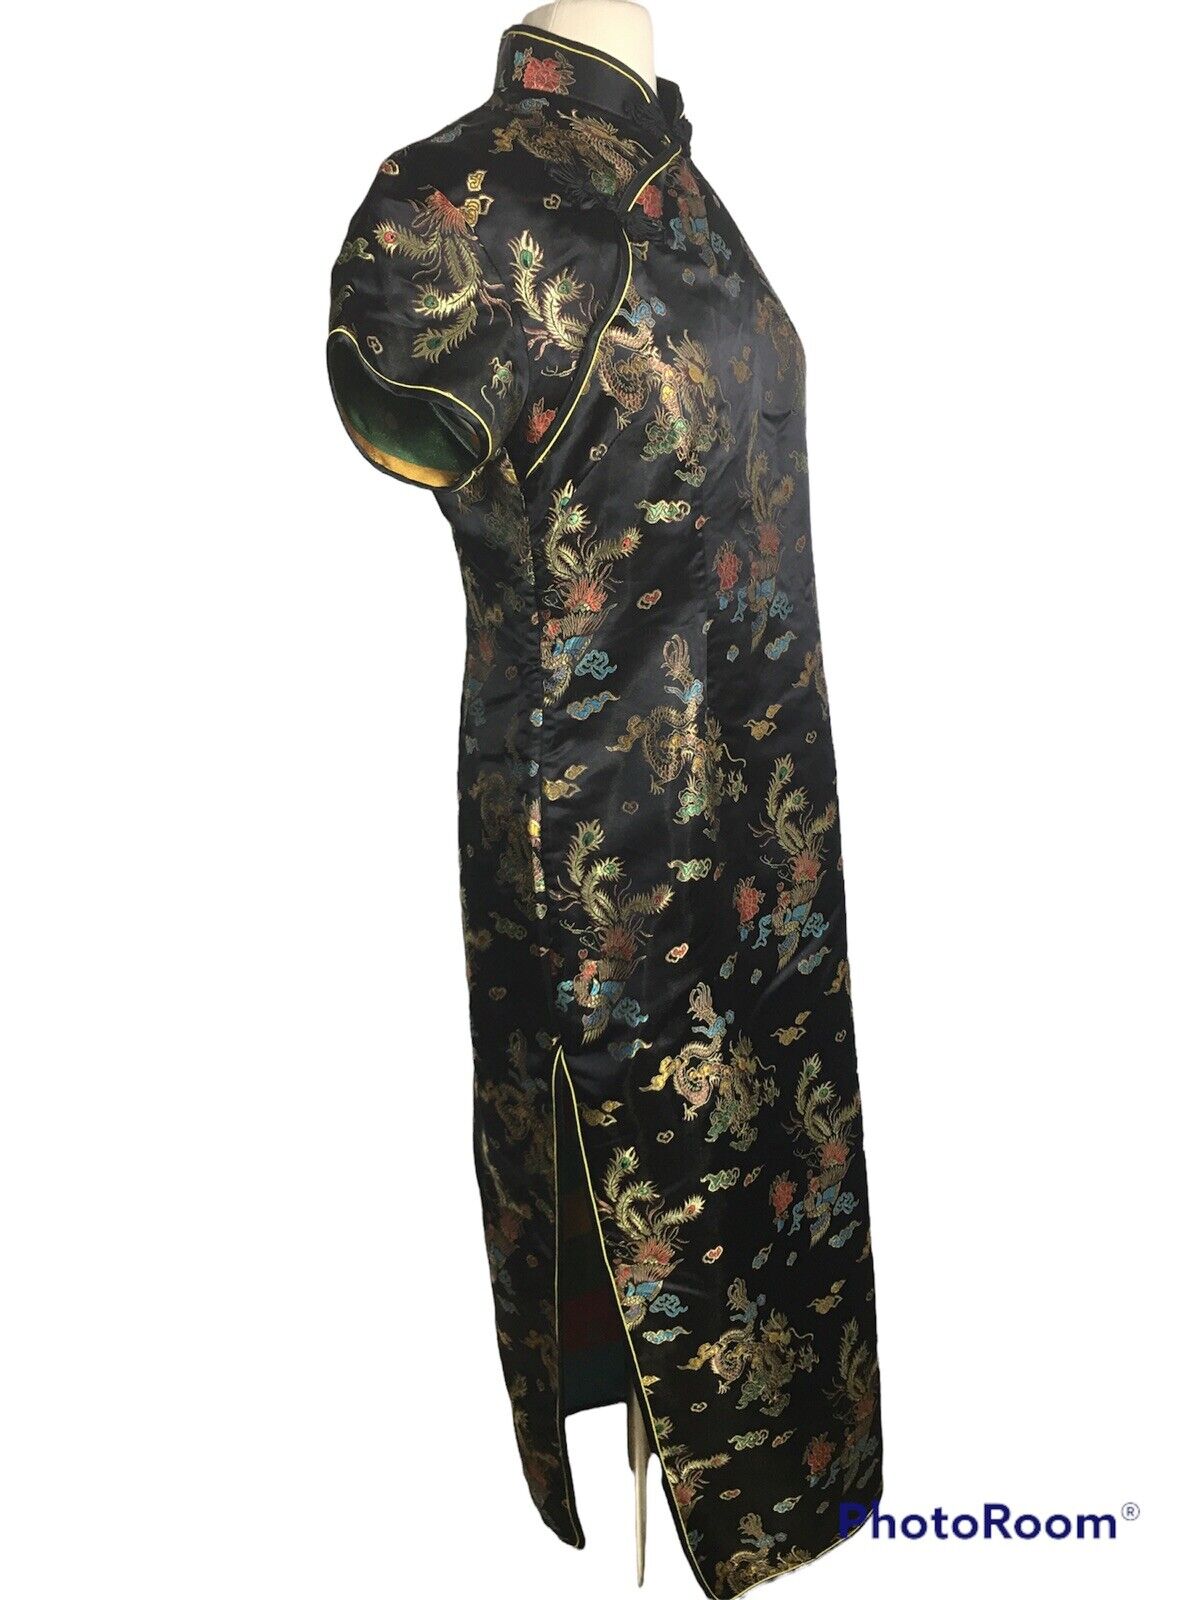 Uahoug Mei Asian Black Geisha Print Kimono Robe Dress Traditional  CL